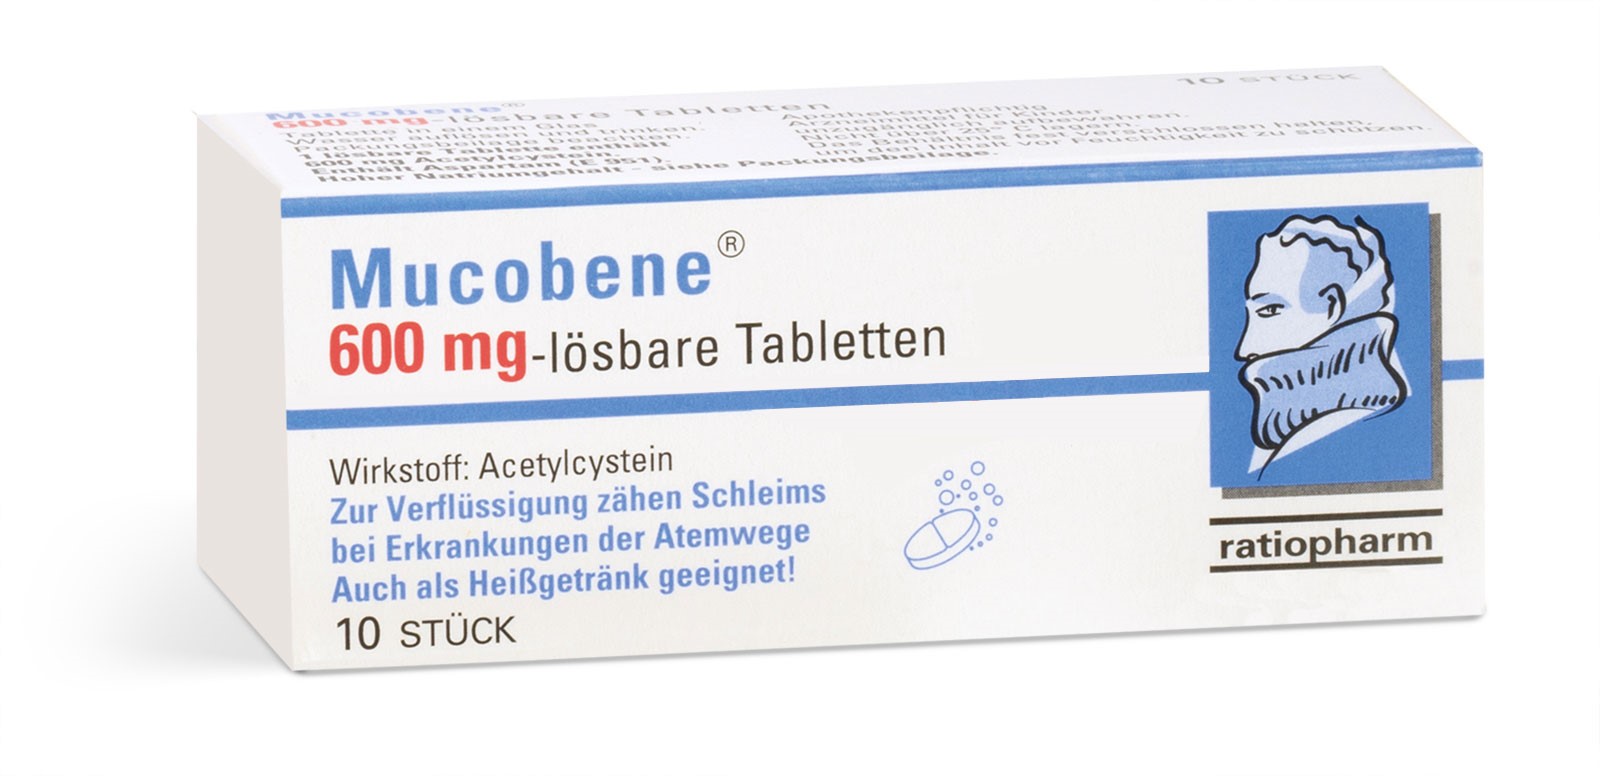 Mucobene 600 mg - lösbare Tabletten